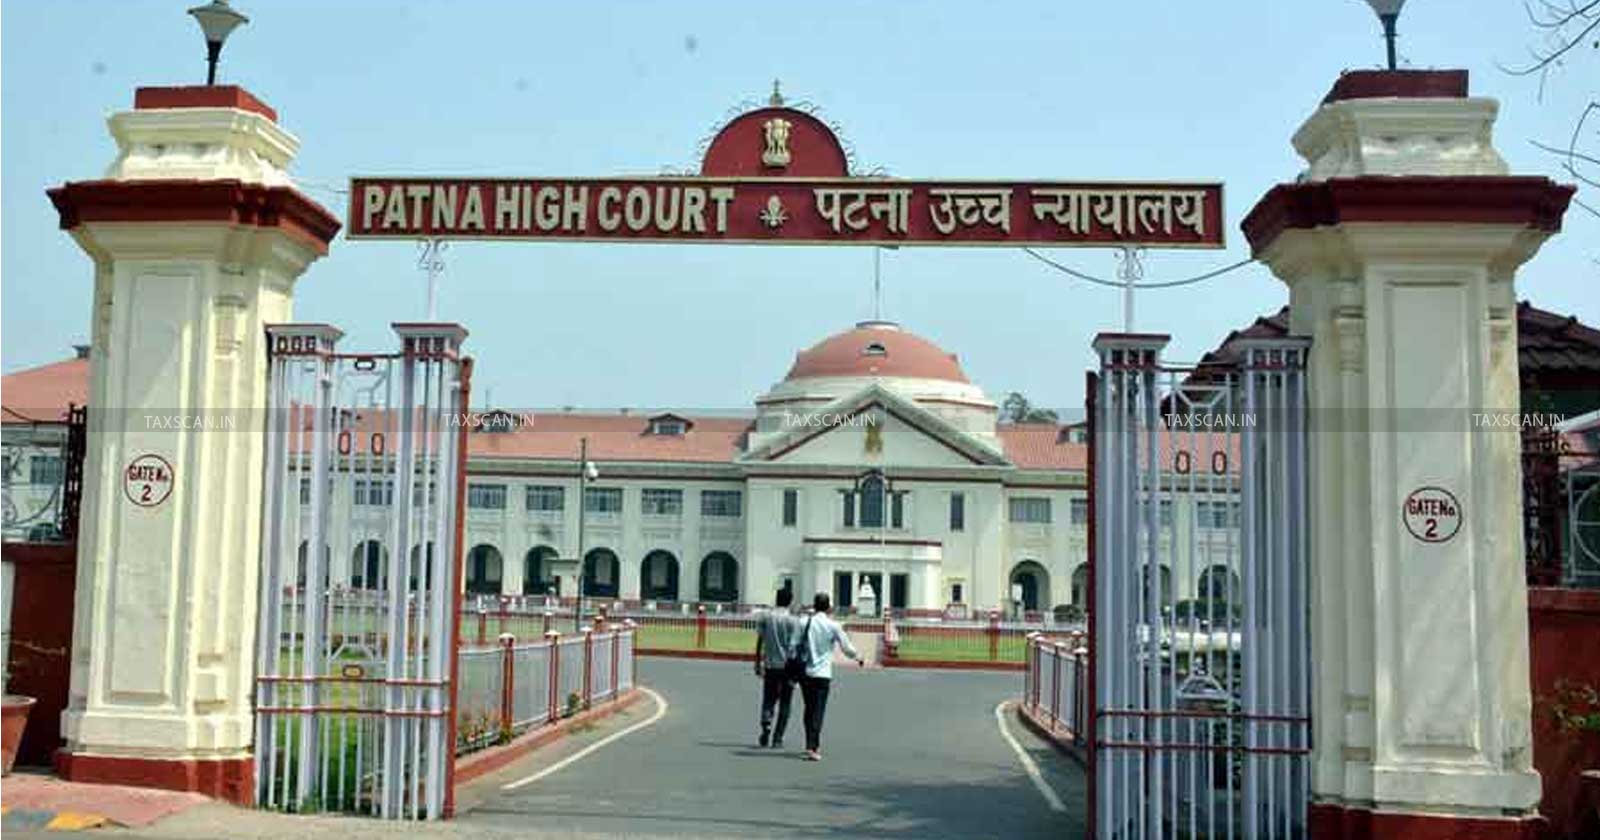 Patna High Court - PIL dismissal - Constitutional Amendment - GST laws - GST - Writ petition - taxscan